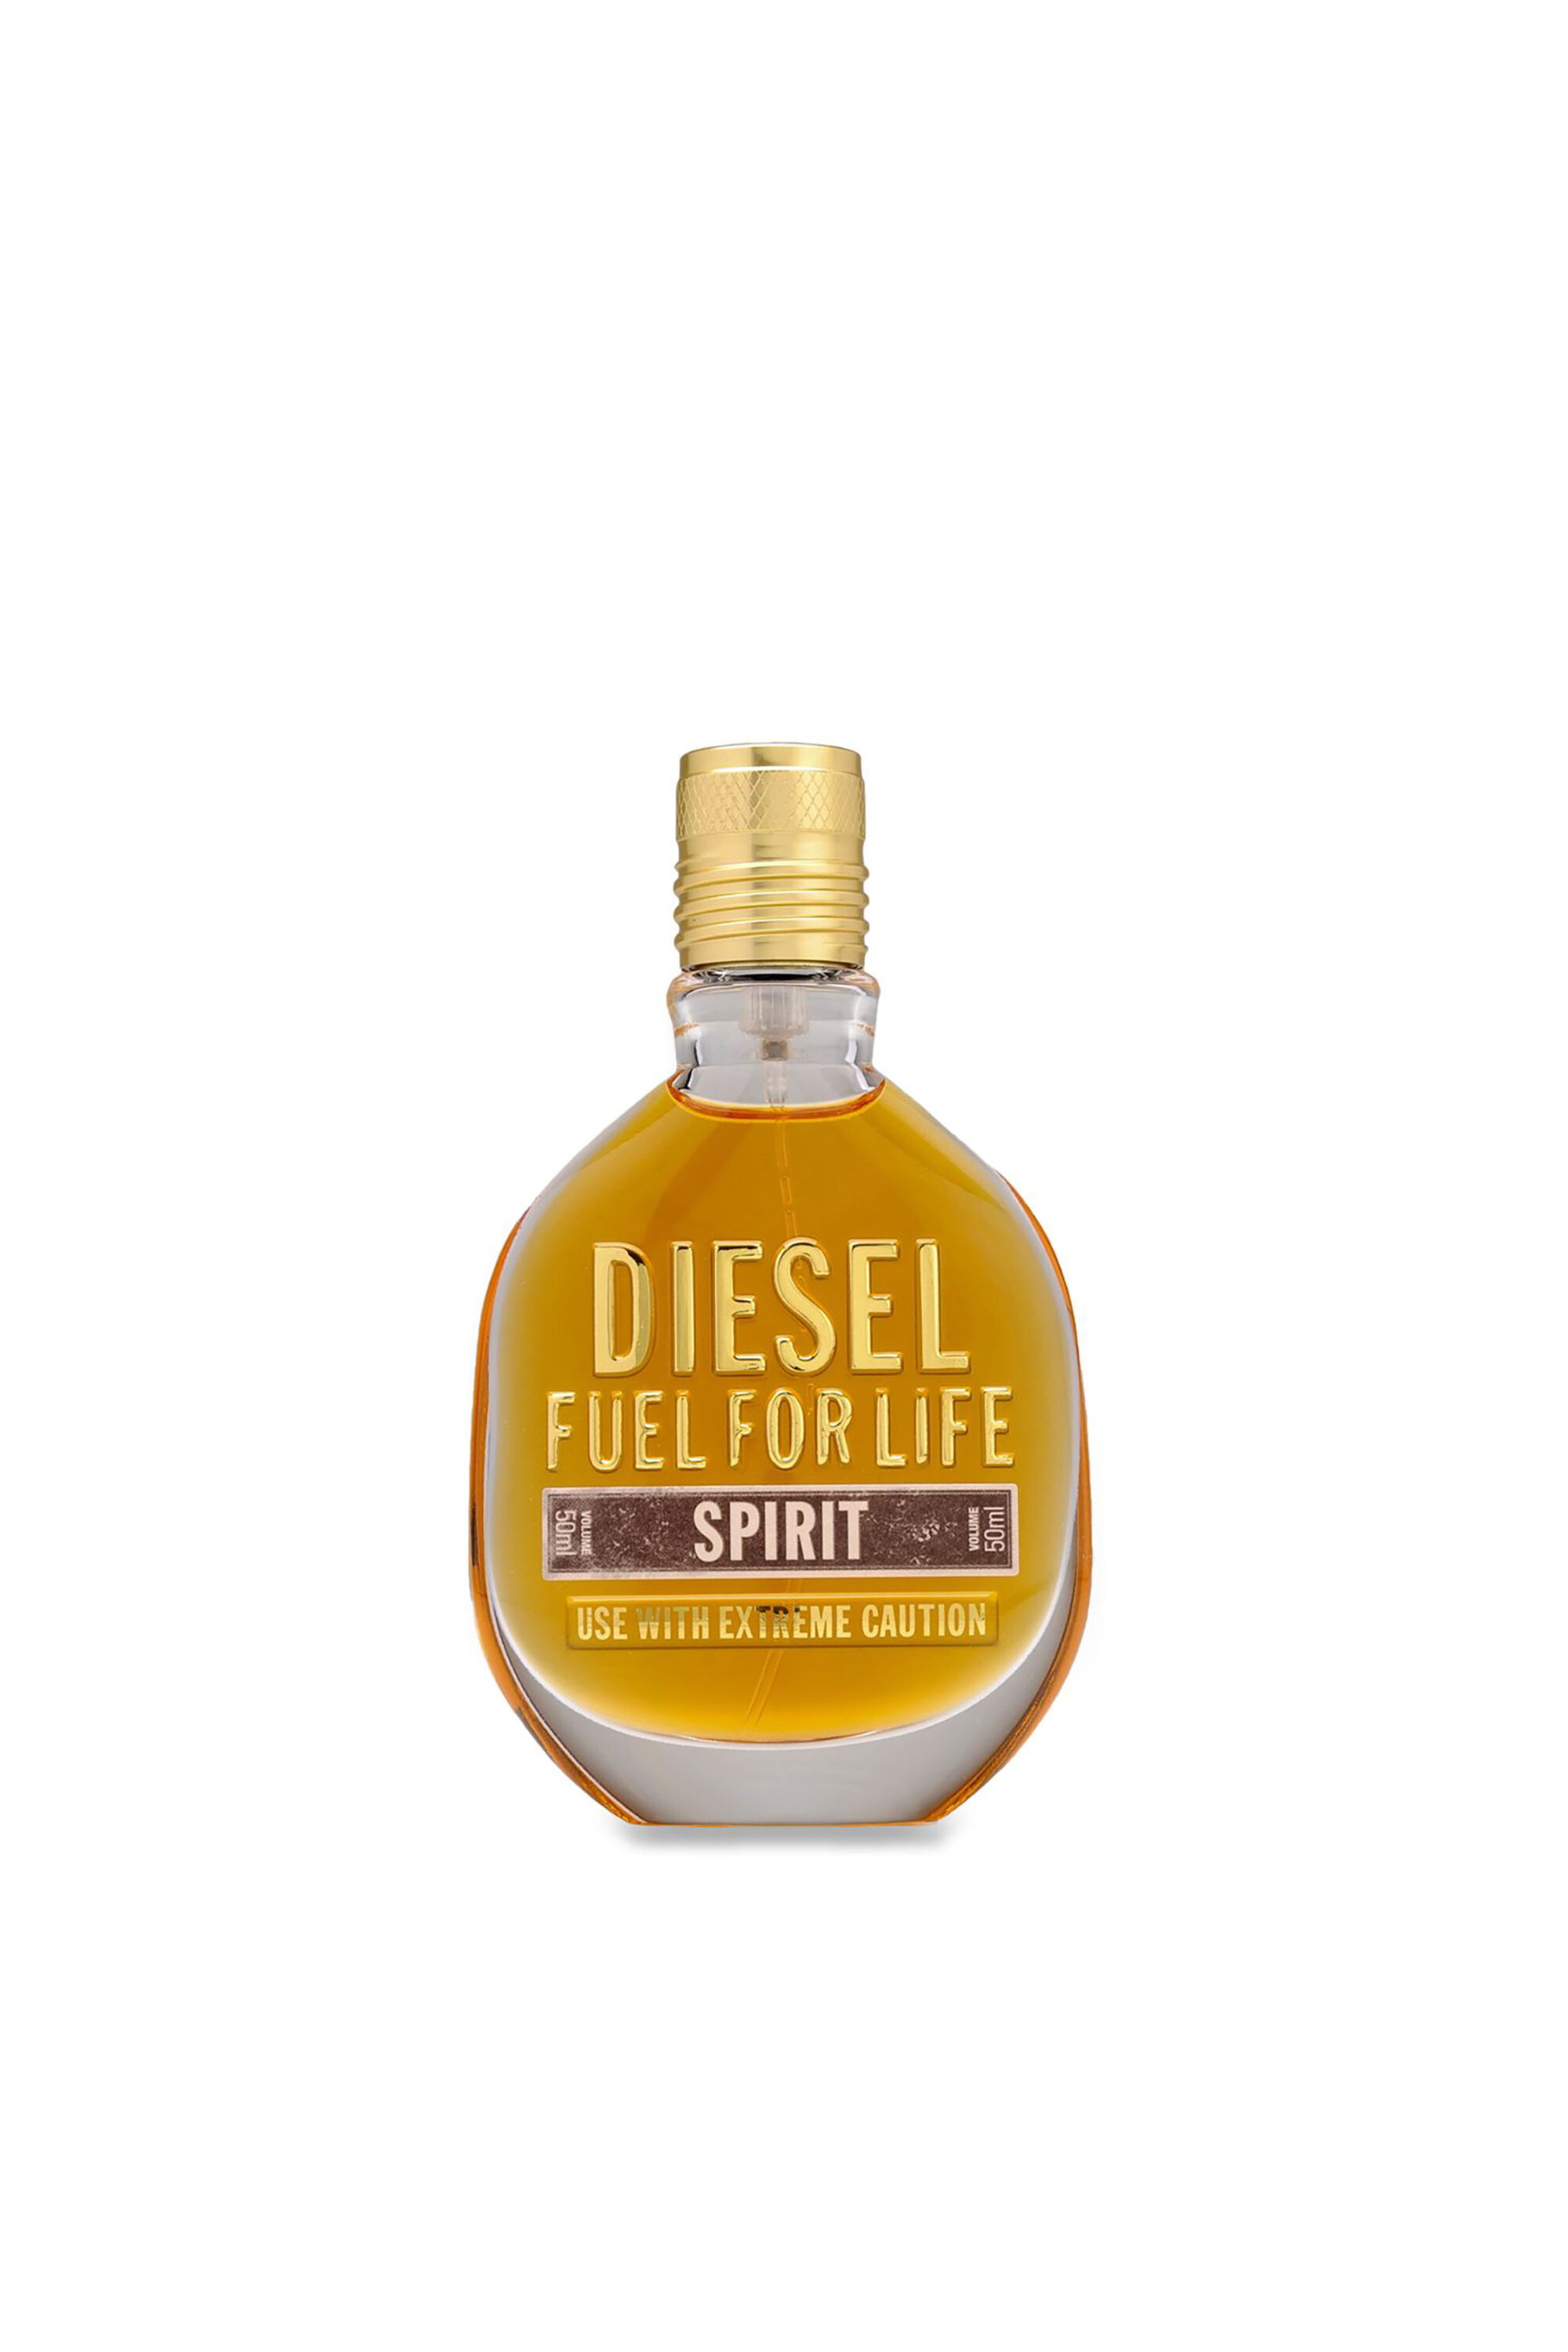 Diesel - FUEL FOR LIFE SPIRIT 50ML, Generico - Image 2